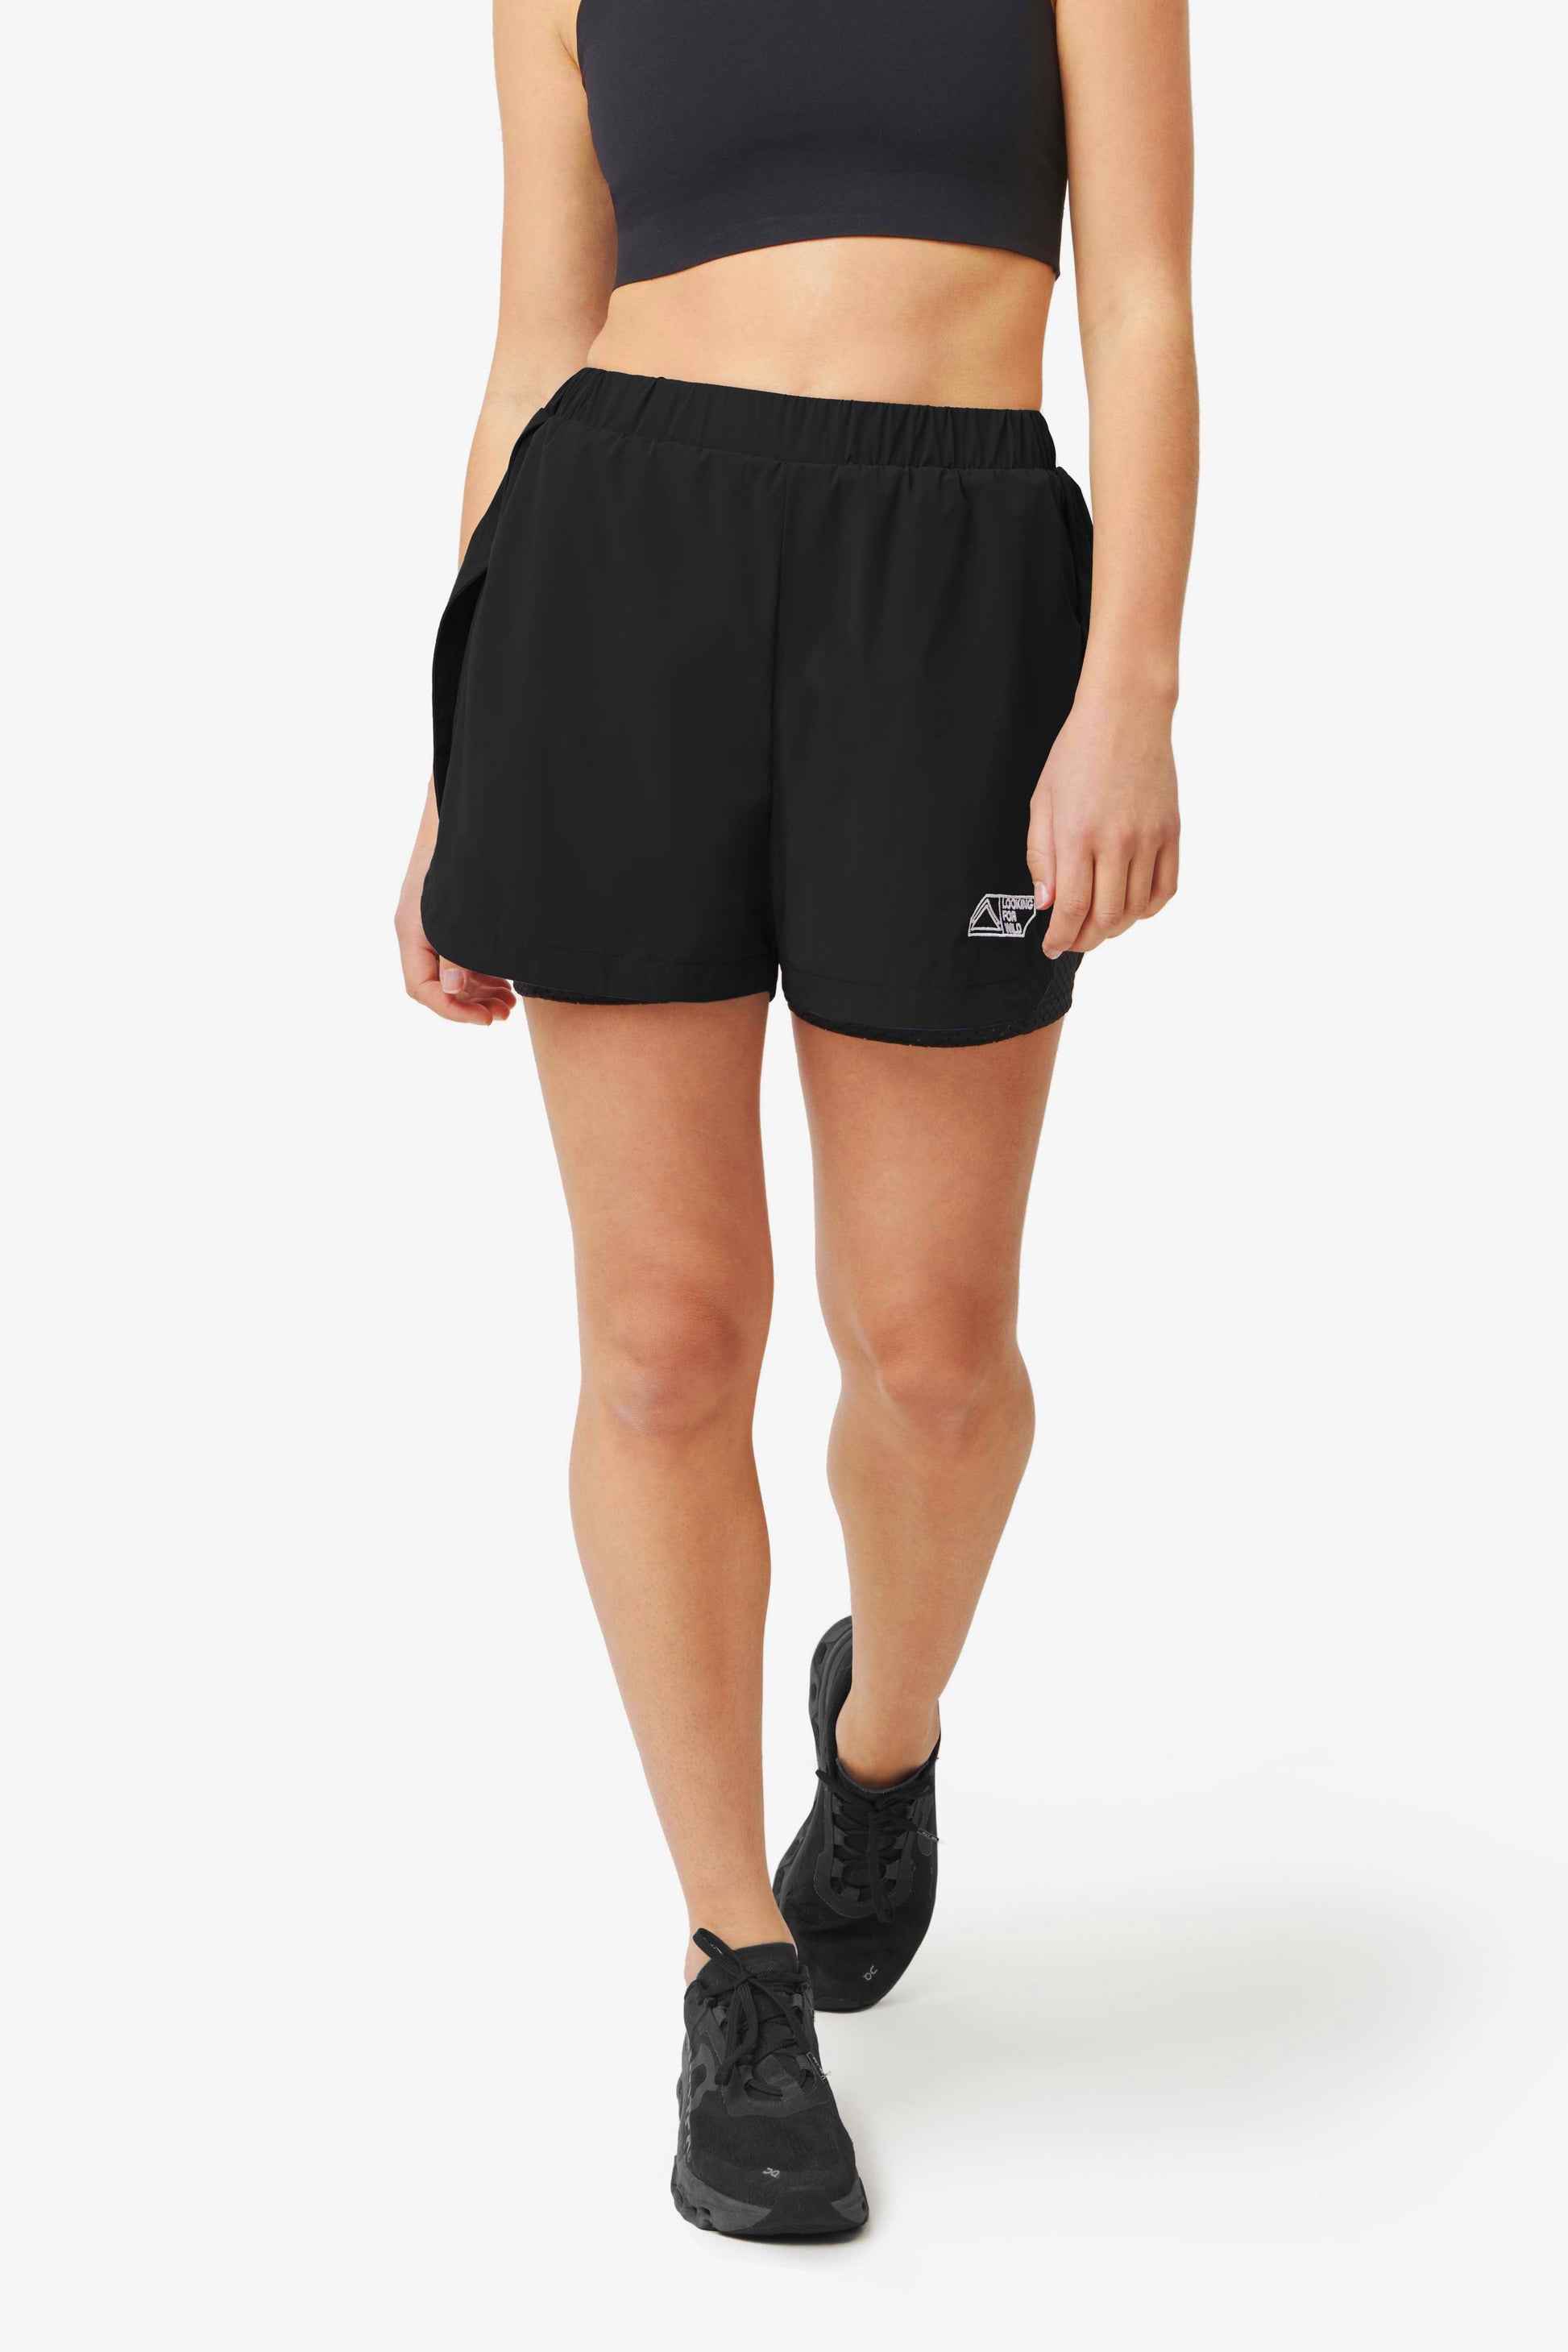 Hava Women's Shorts PIRATE BLACK